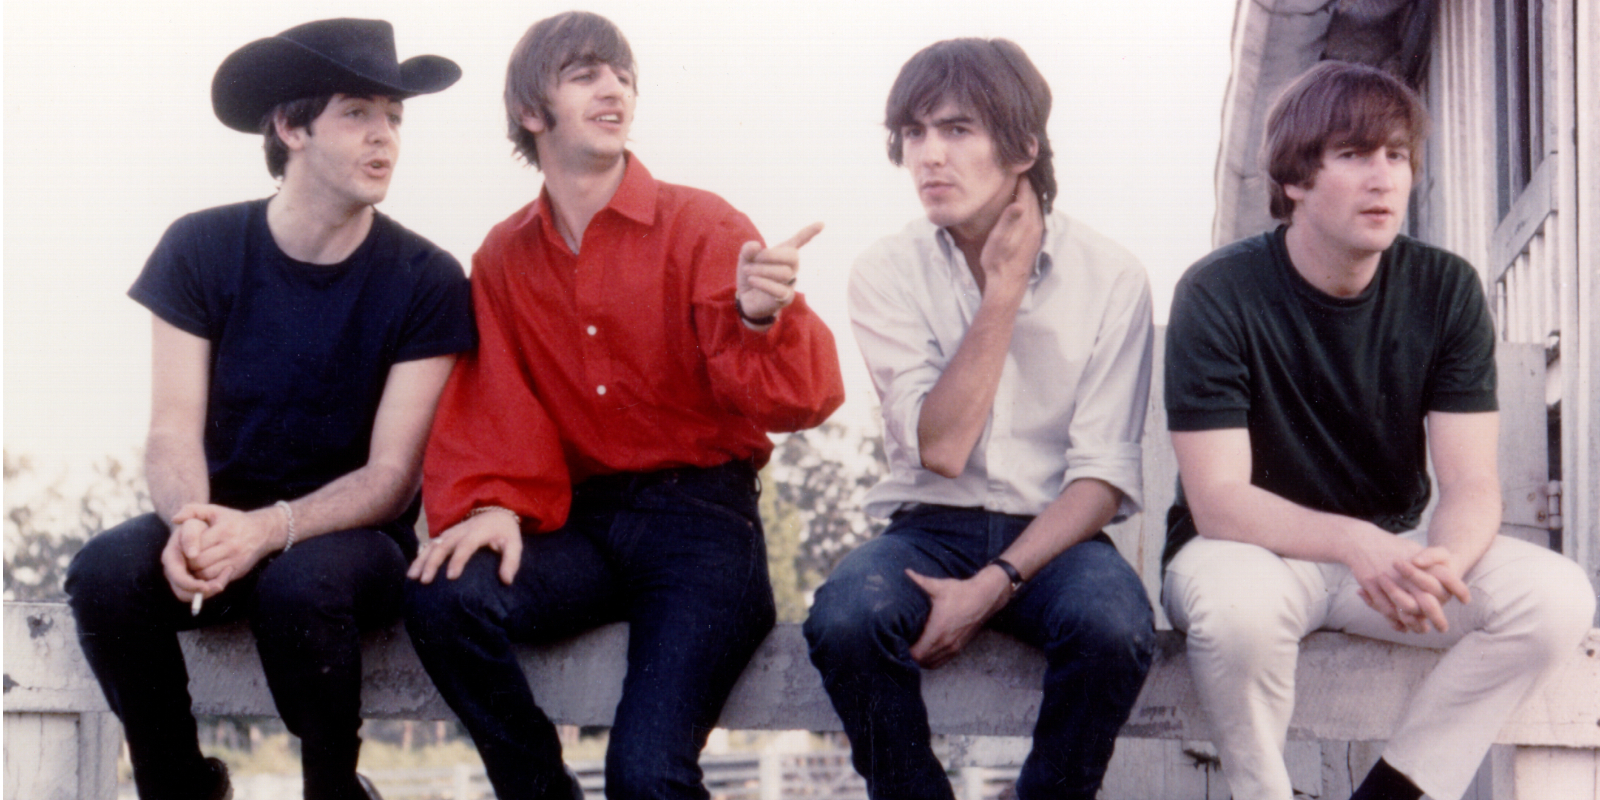 Paul McCartney, Ringo Starr, George Harrison and John Lennon on the set of the movie 'Help!'